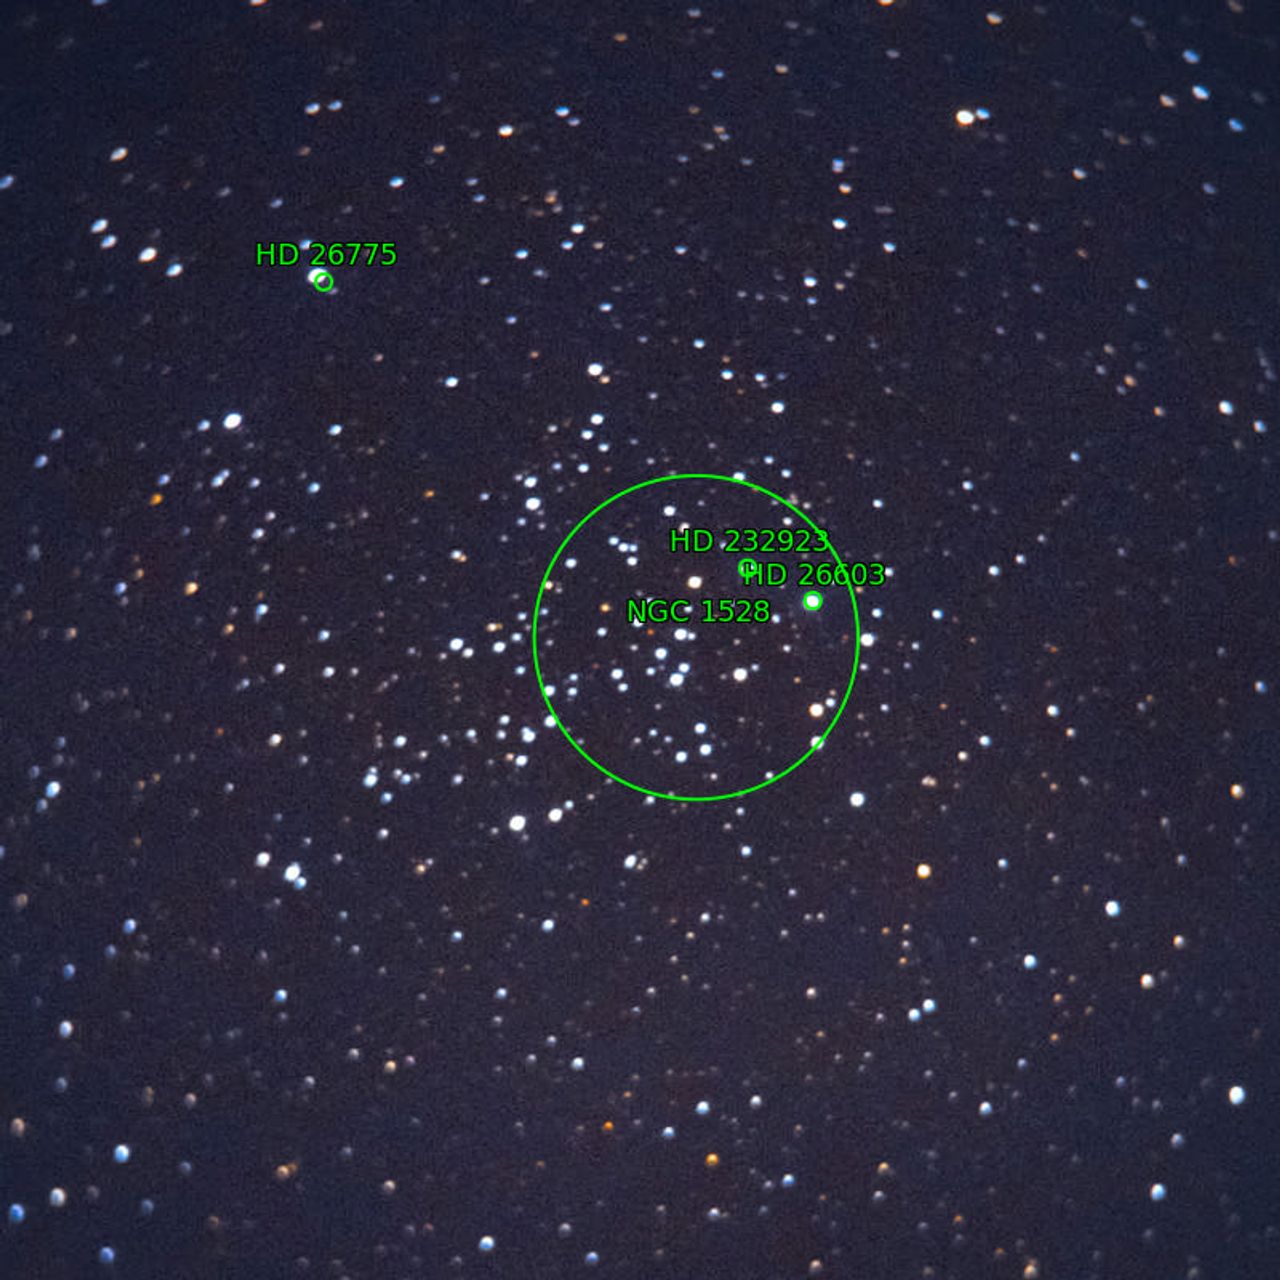 Annotation around NGC1528